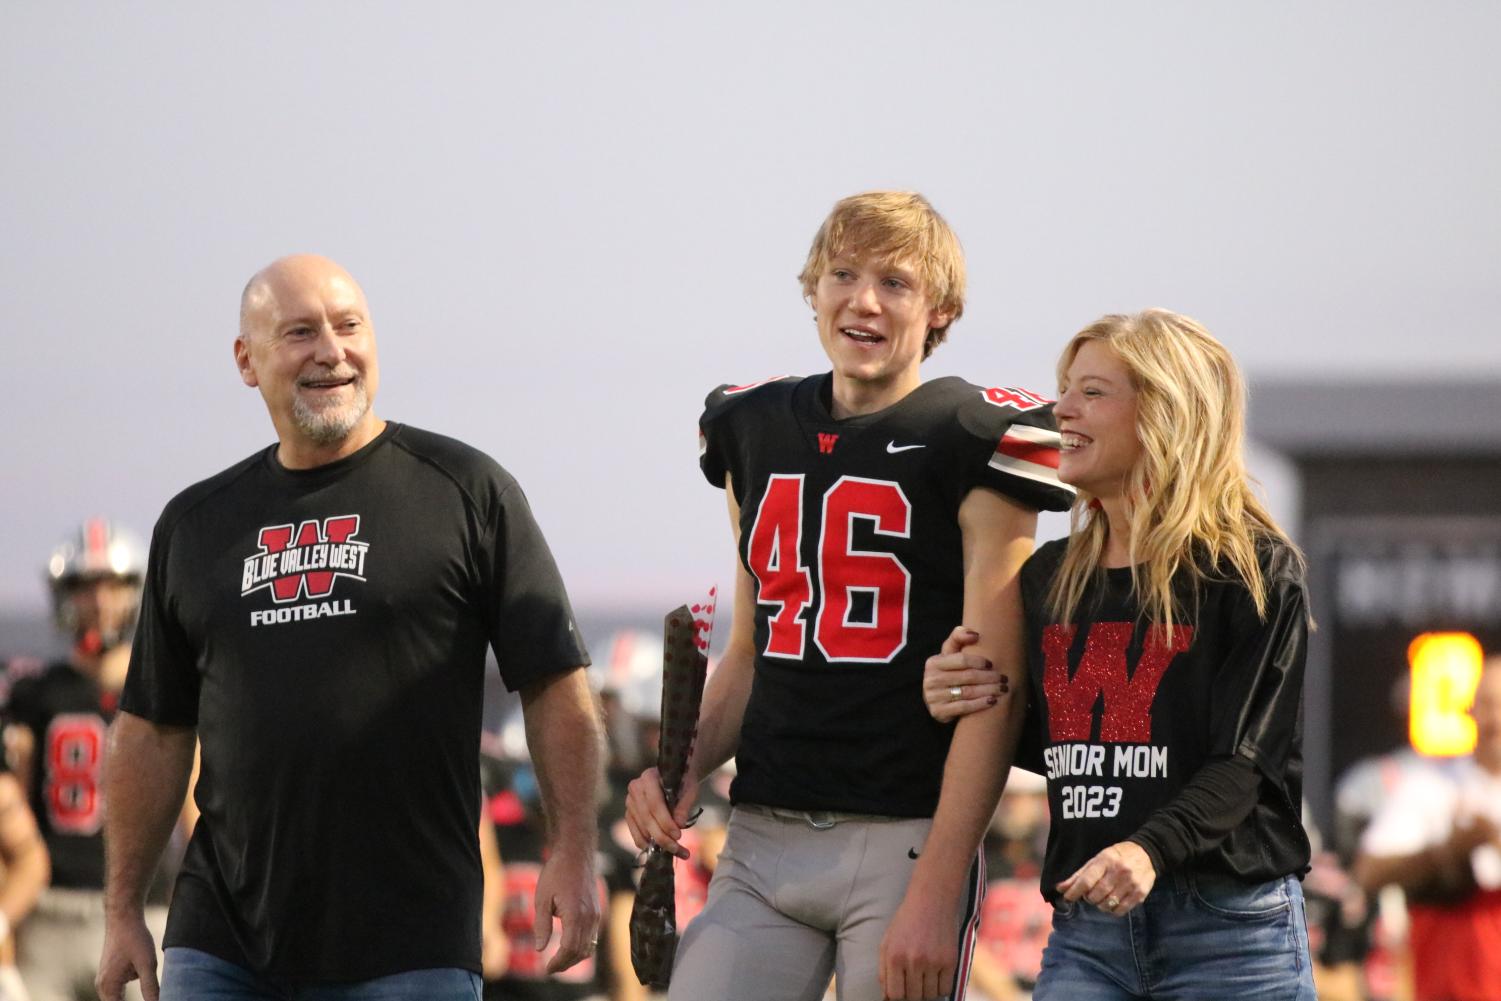 Walking with his parents, senior Dan McCabe gets recognized at footballs senior night on Oct. 12.